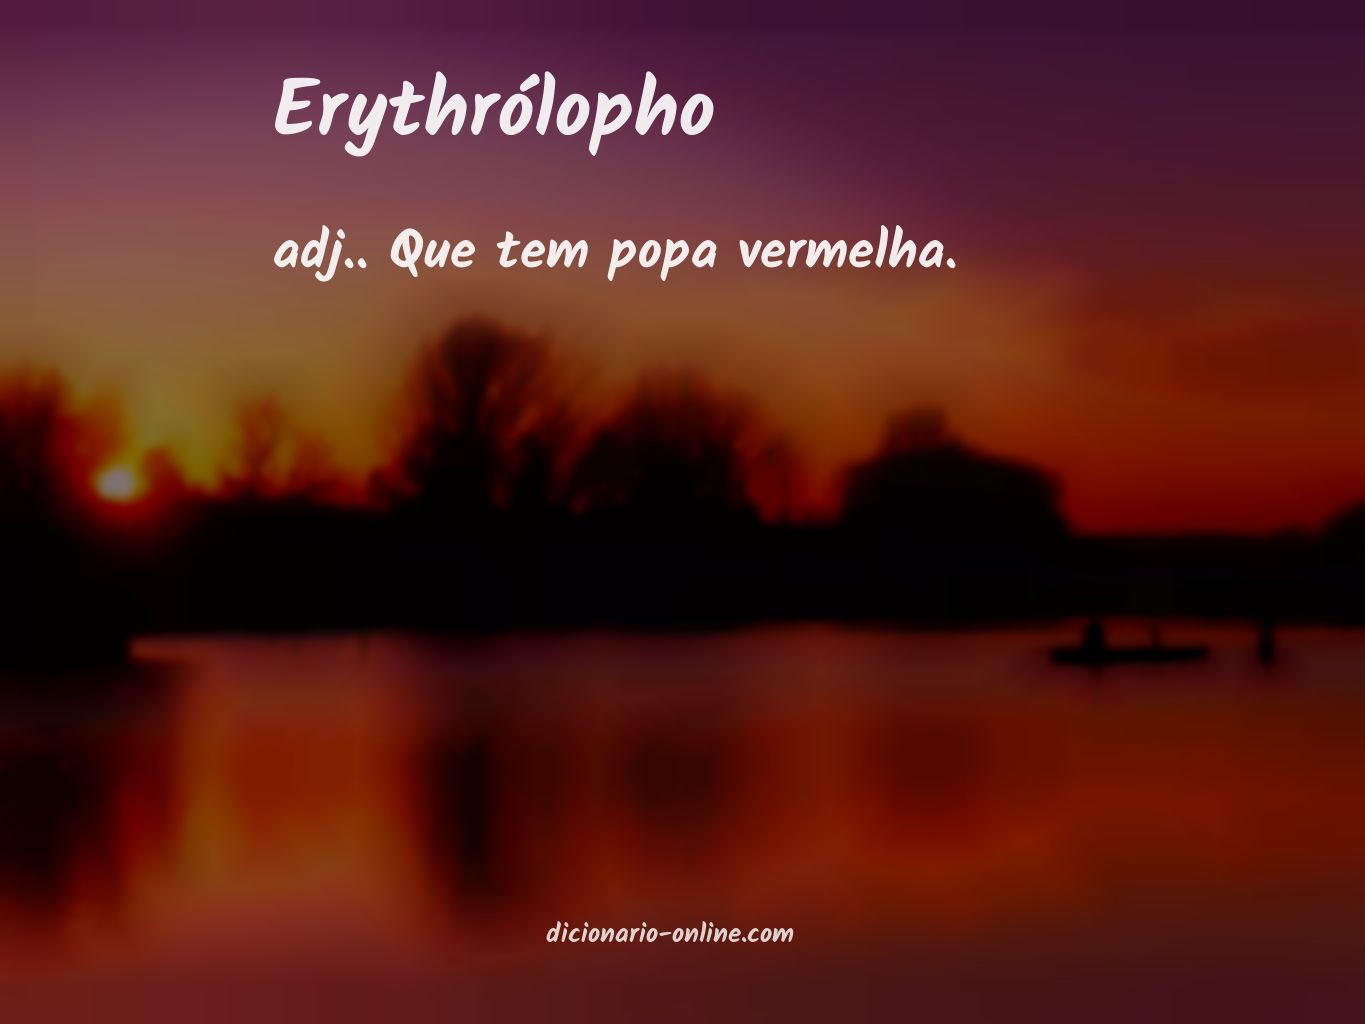 Significado de erythrólopho